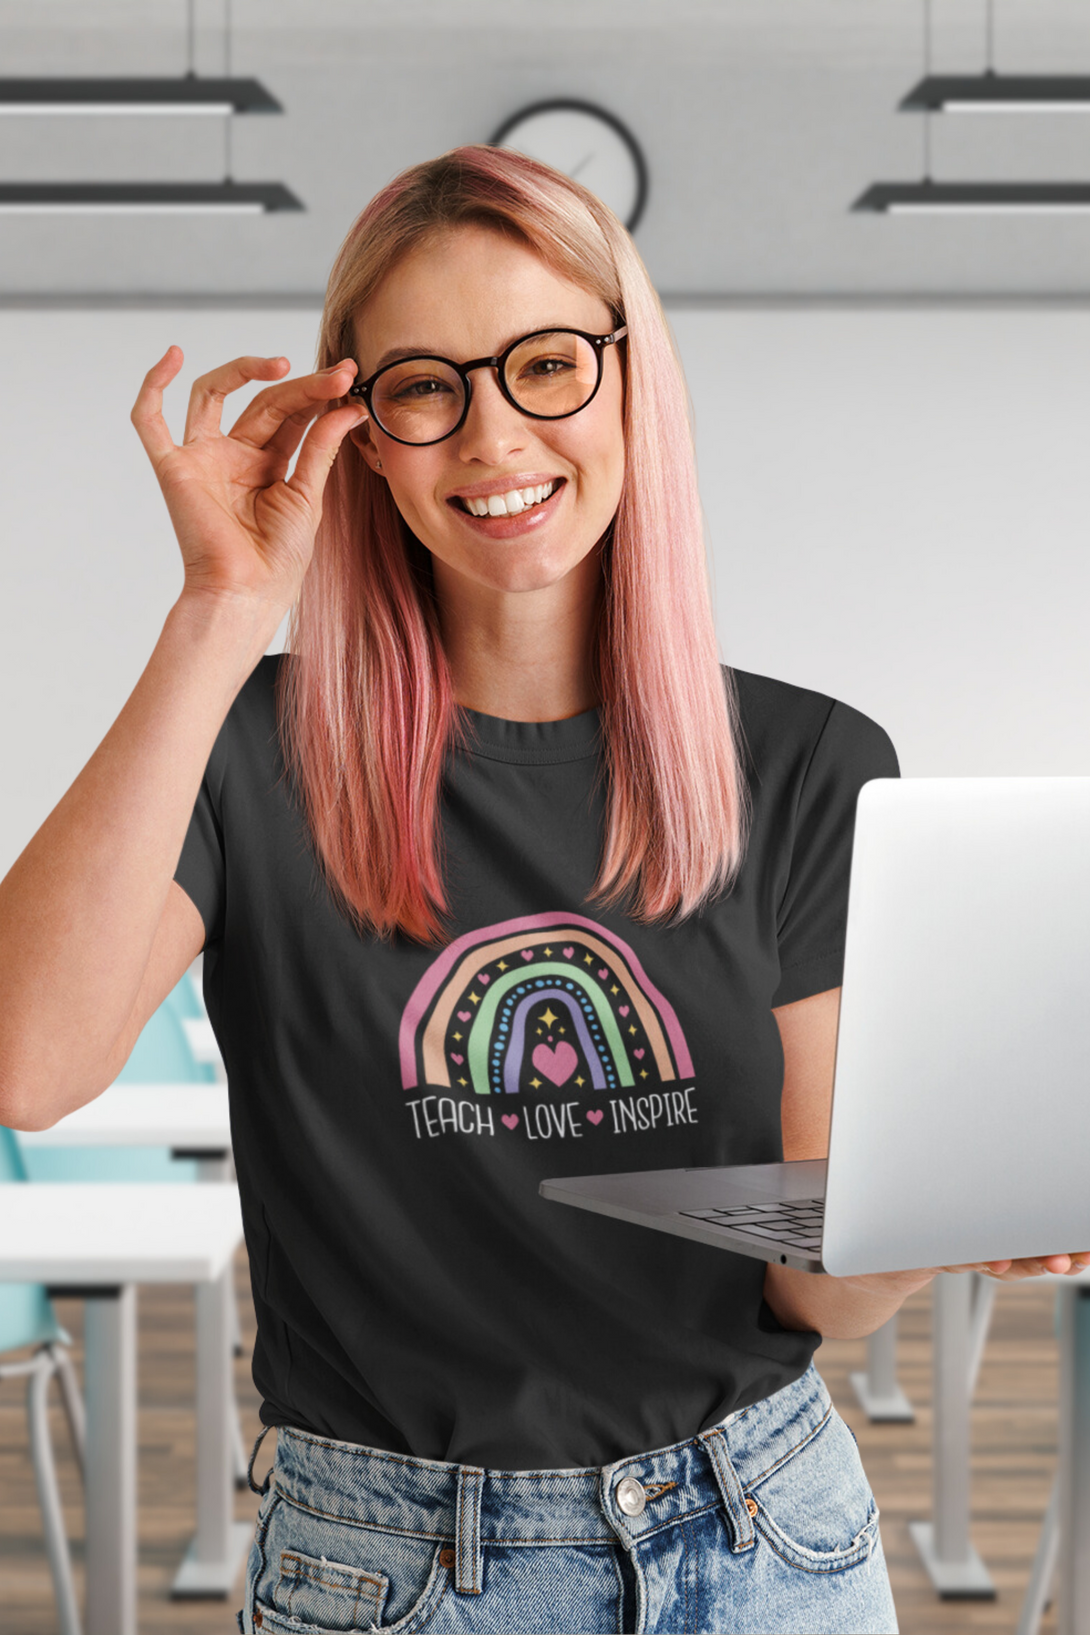 Teach, Love, Inspire Printed T-Shirt For Women - WowWaves - 5